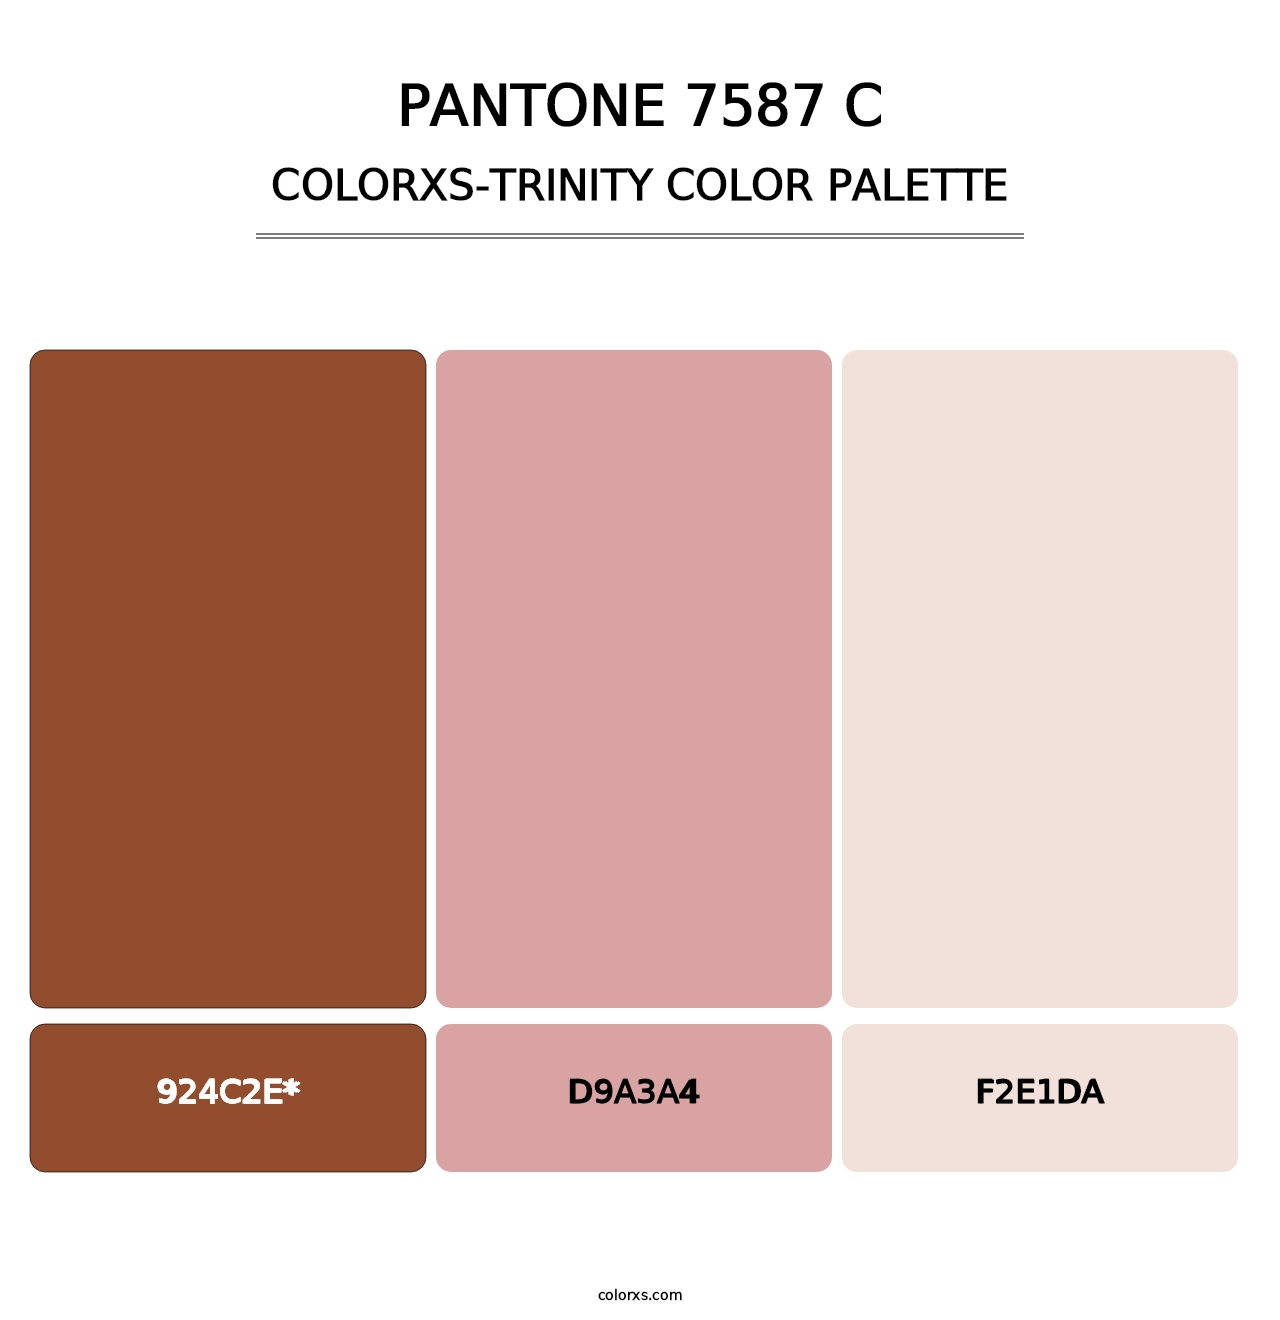 PANTONE 7587 C - Colorxs Trinity Palette